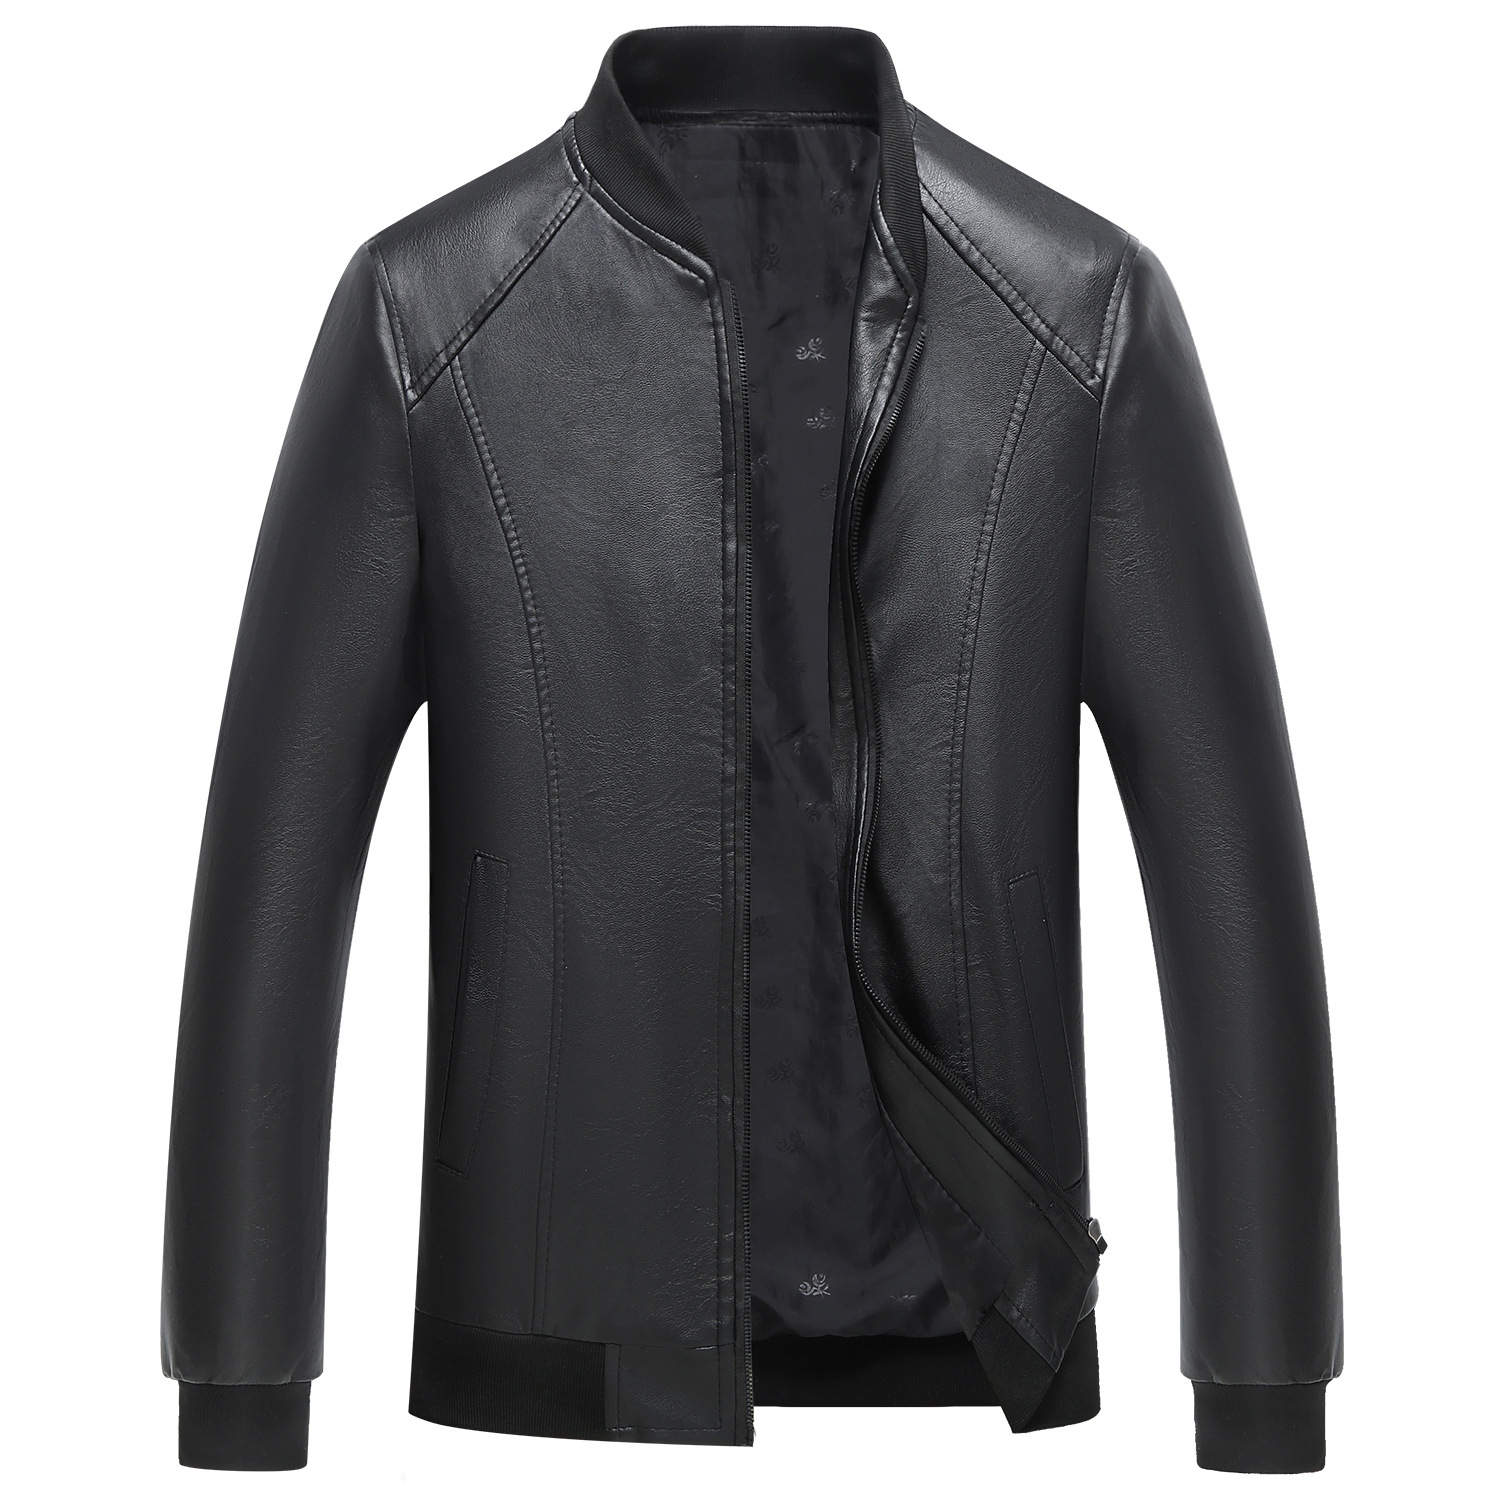 Baseball collar single coat black (calendered leather)